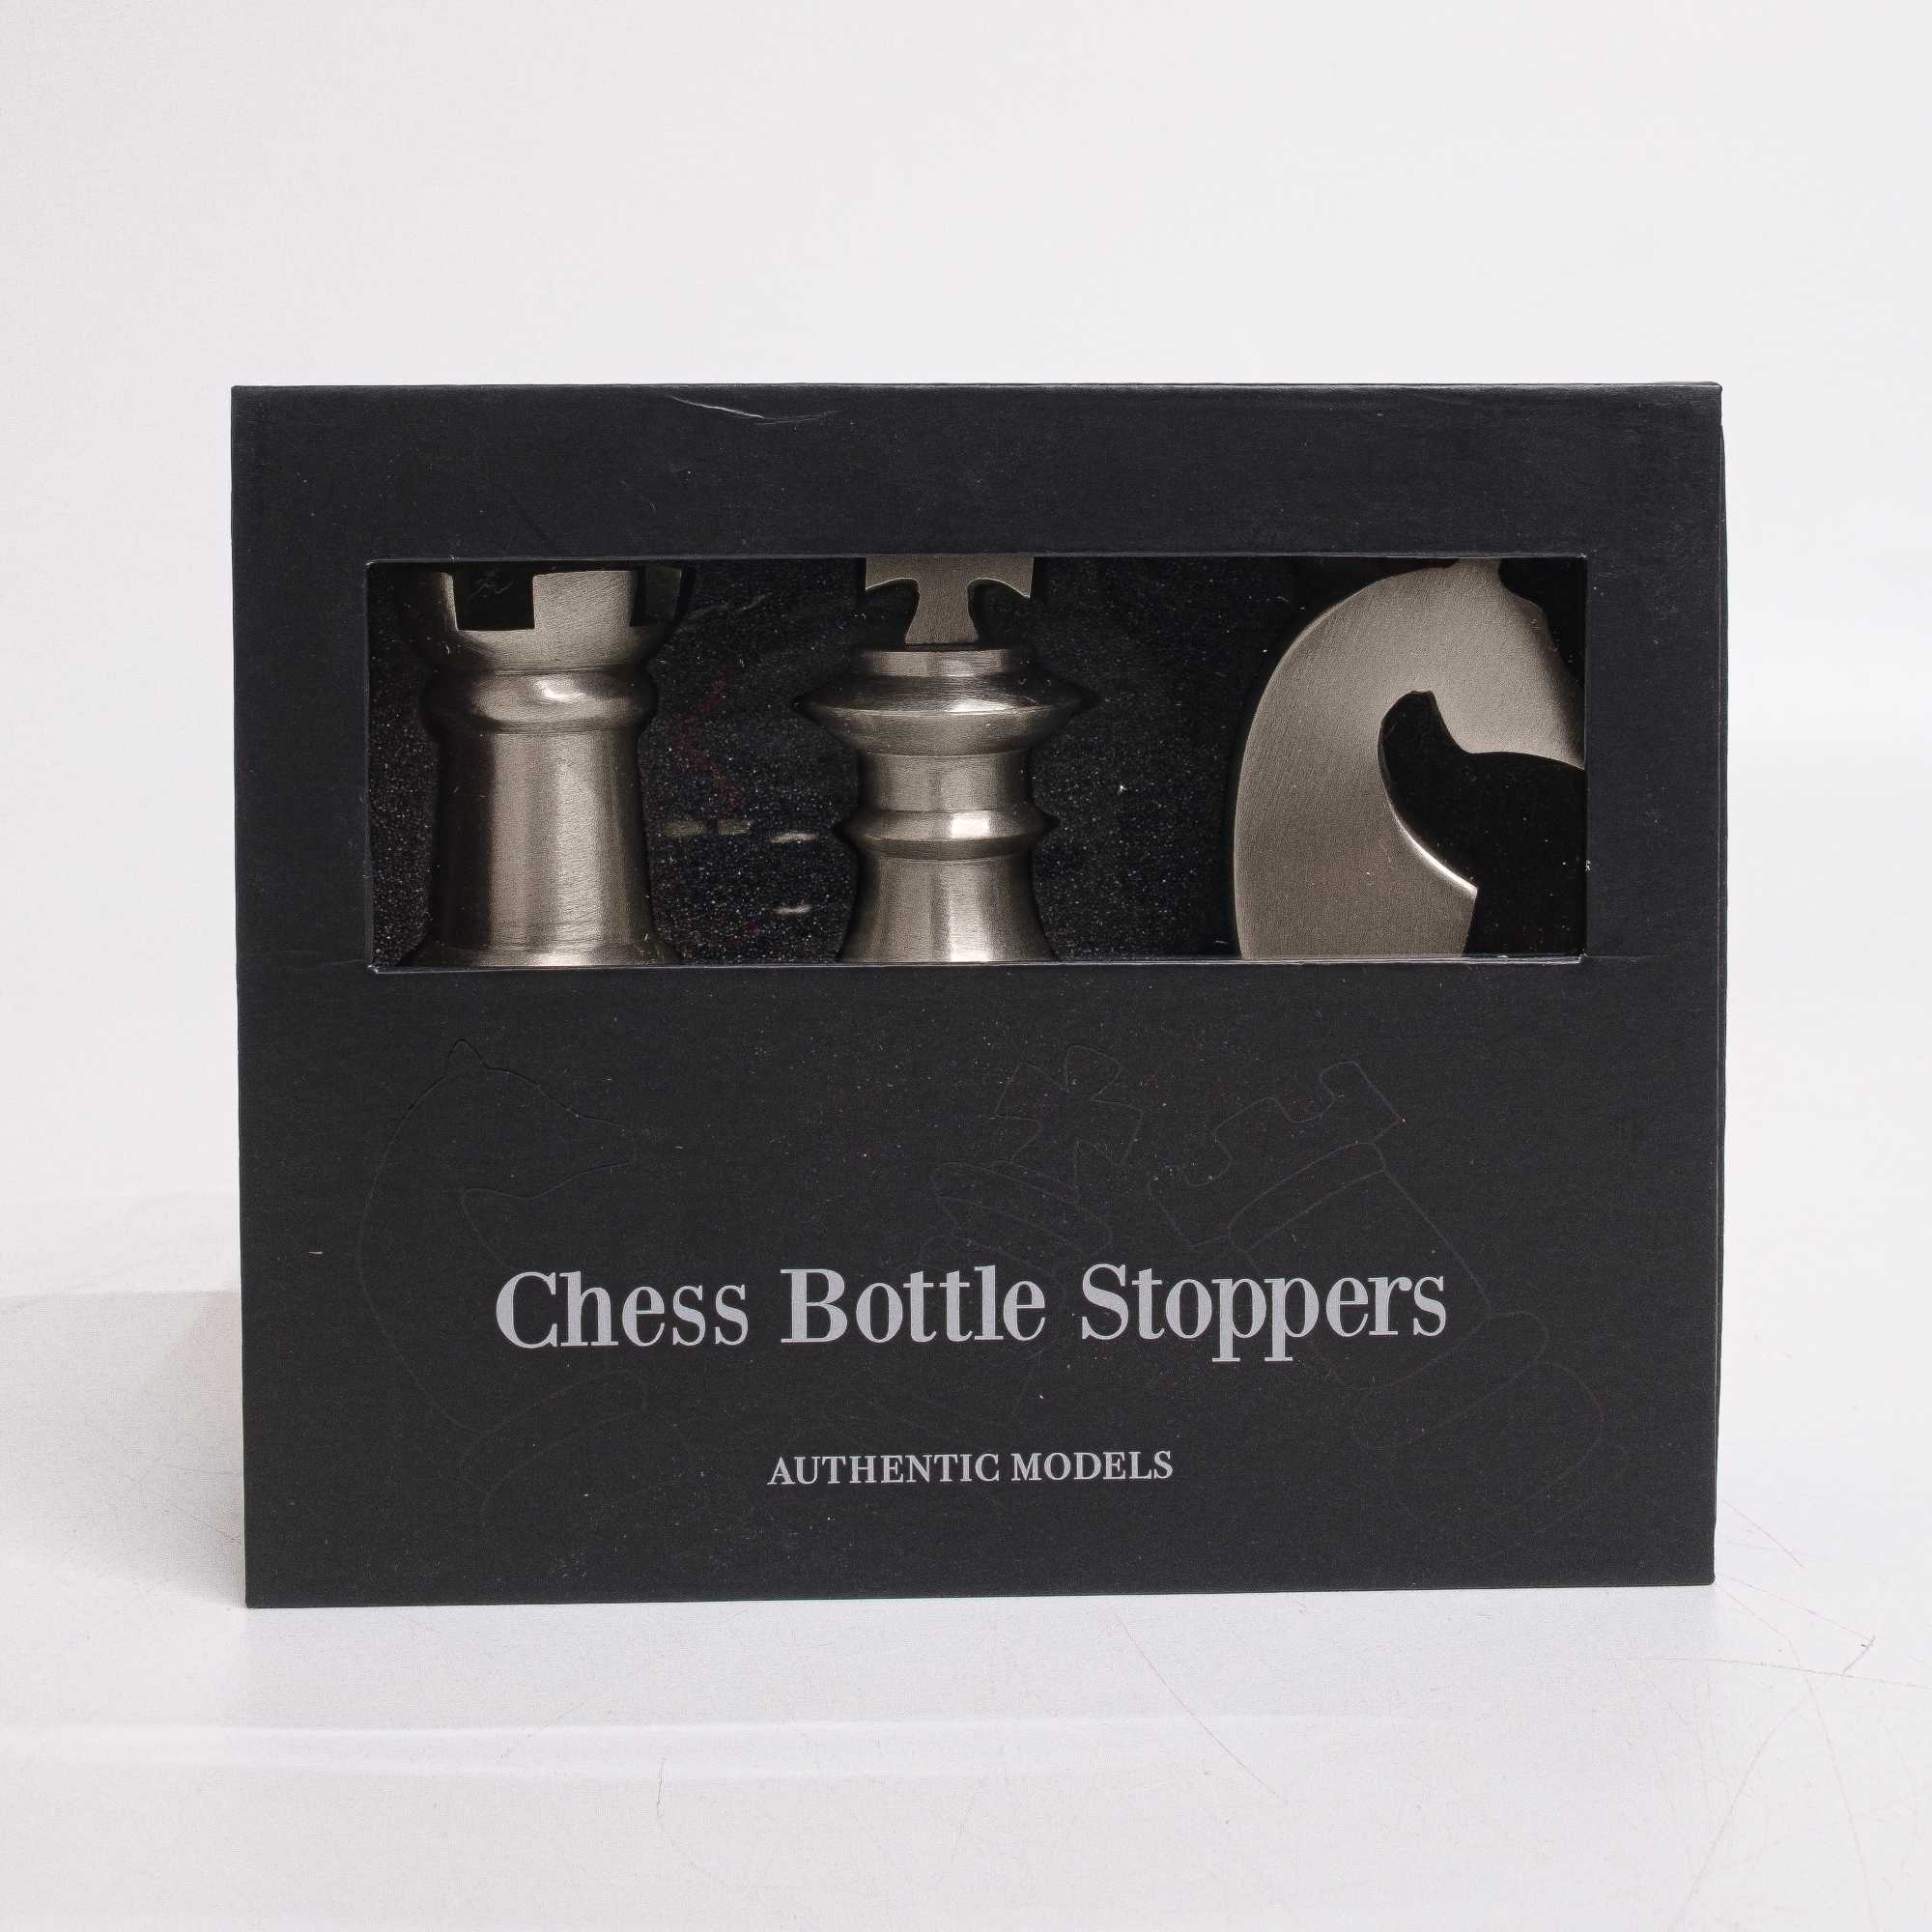 Authentic Models Chess Bottle Stopper